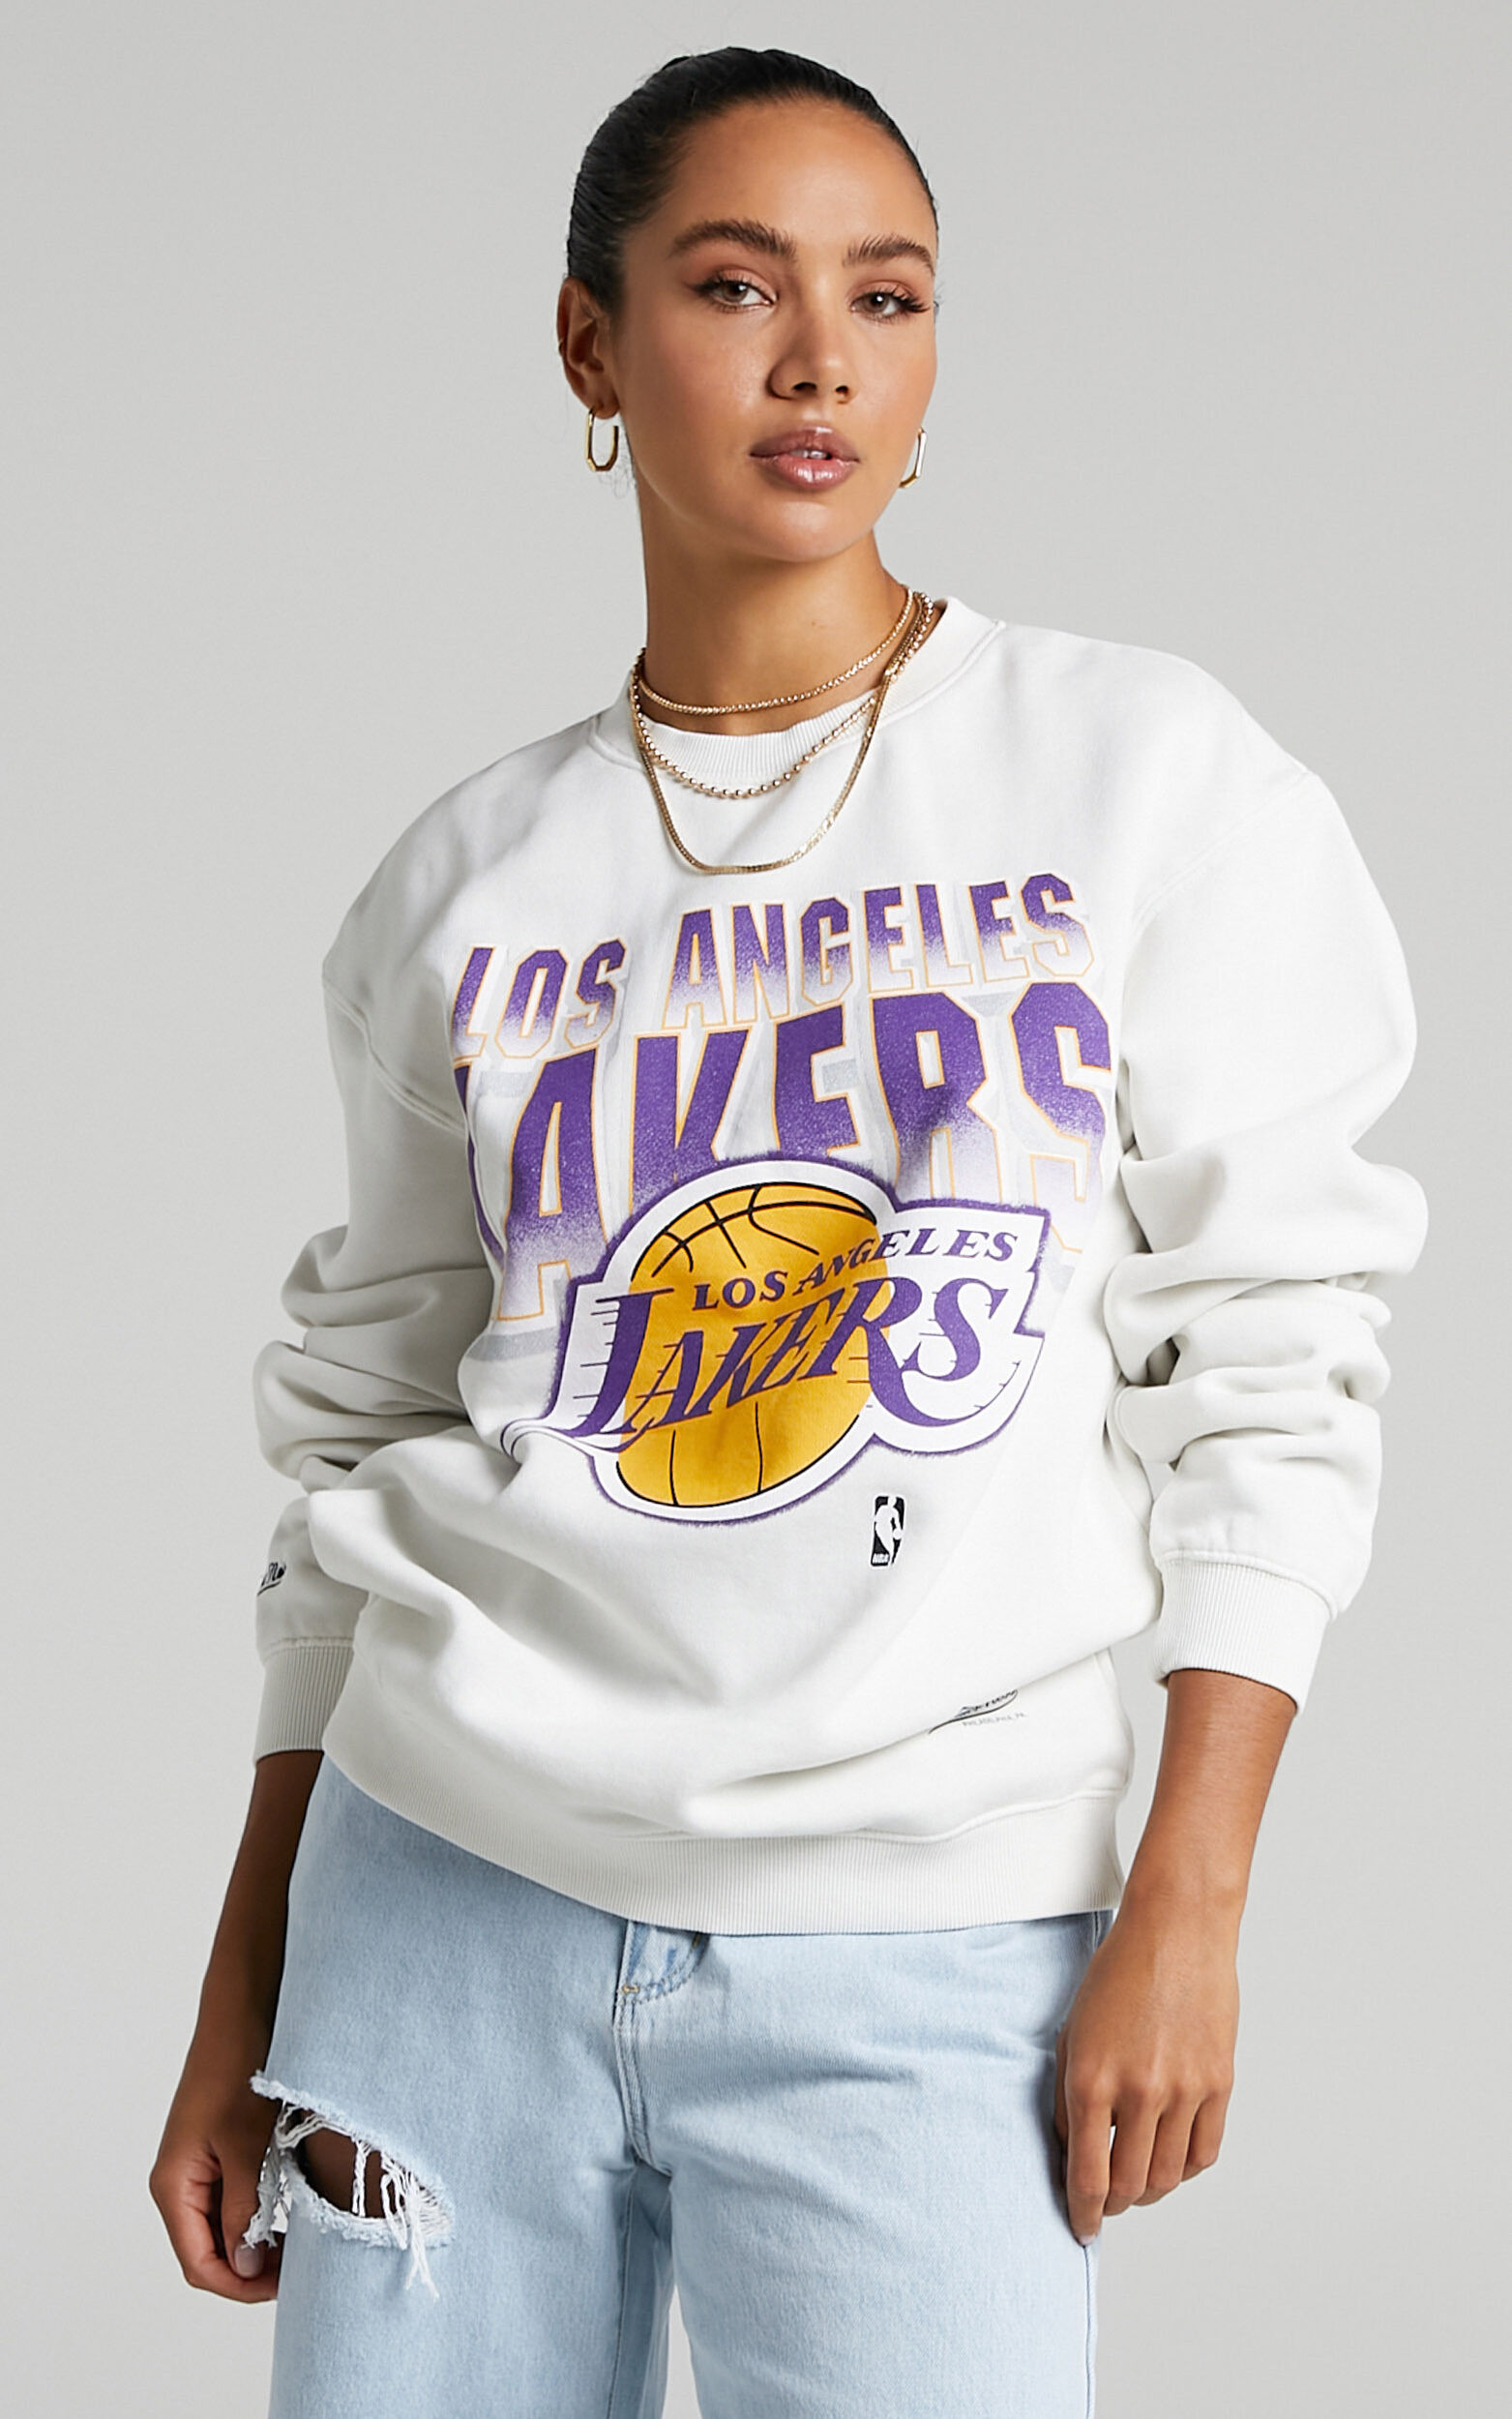 Womens Lakers Vintage Crew